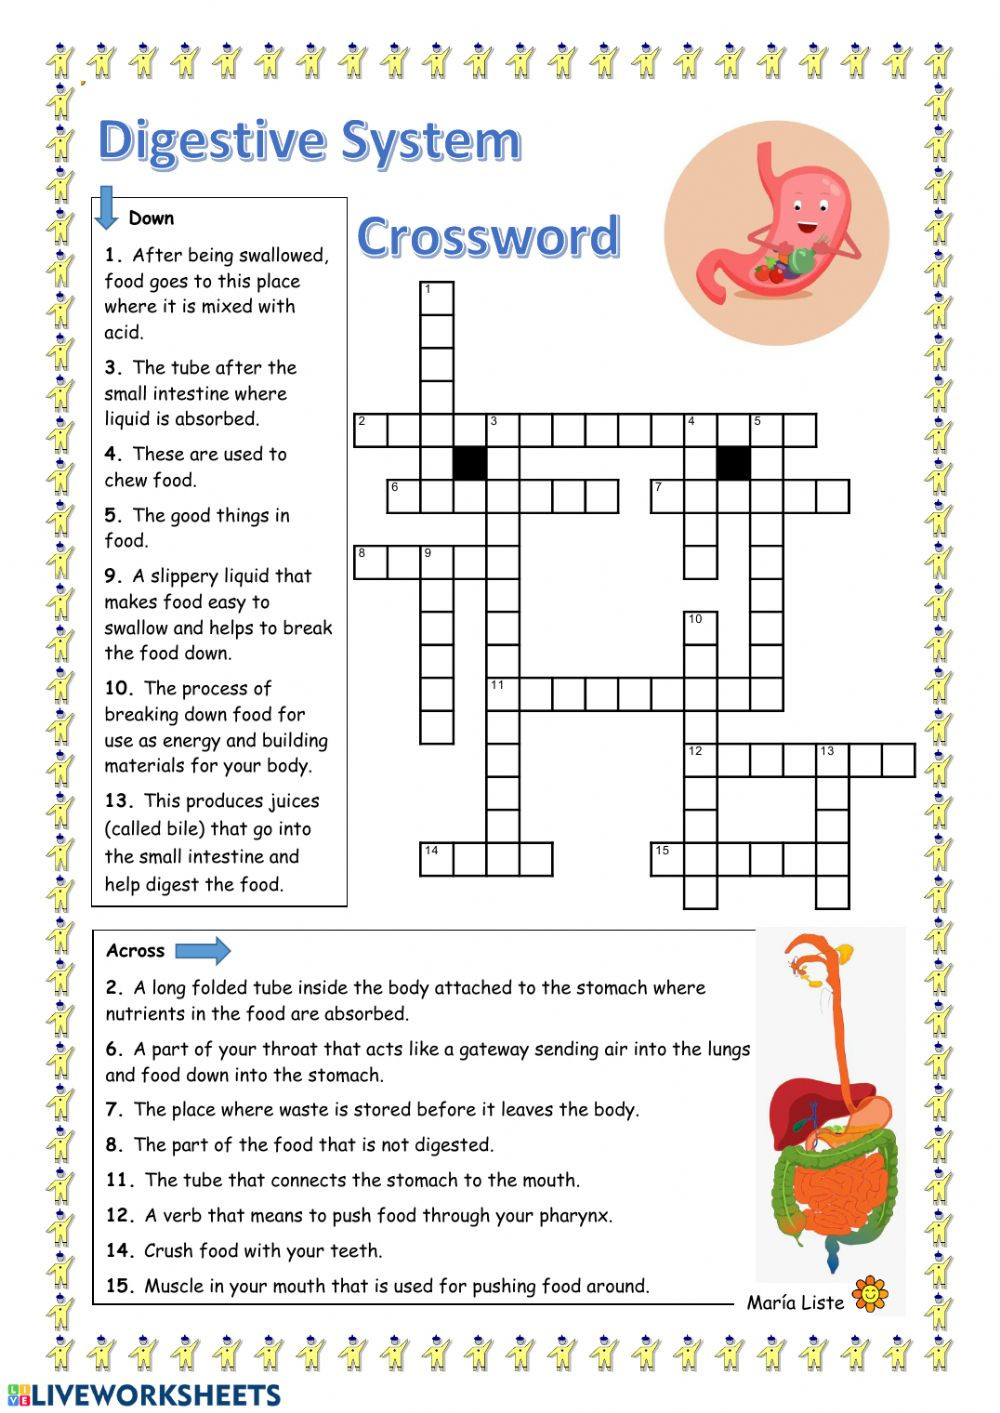 Digestive System Worksheet Answer Key Digestive System Crossword Interactive Worksheet